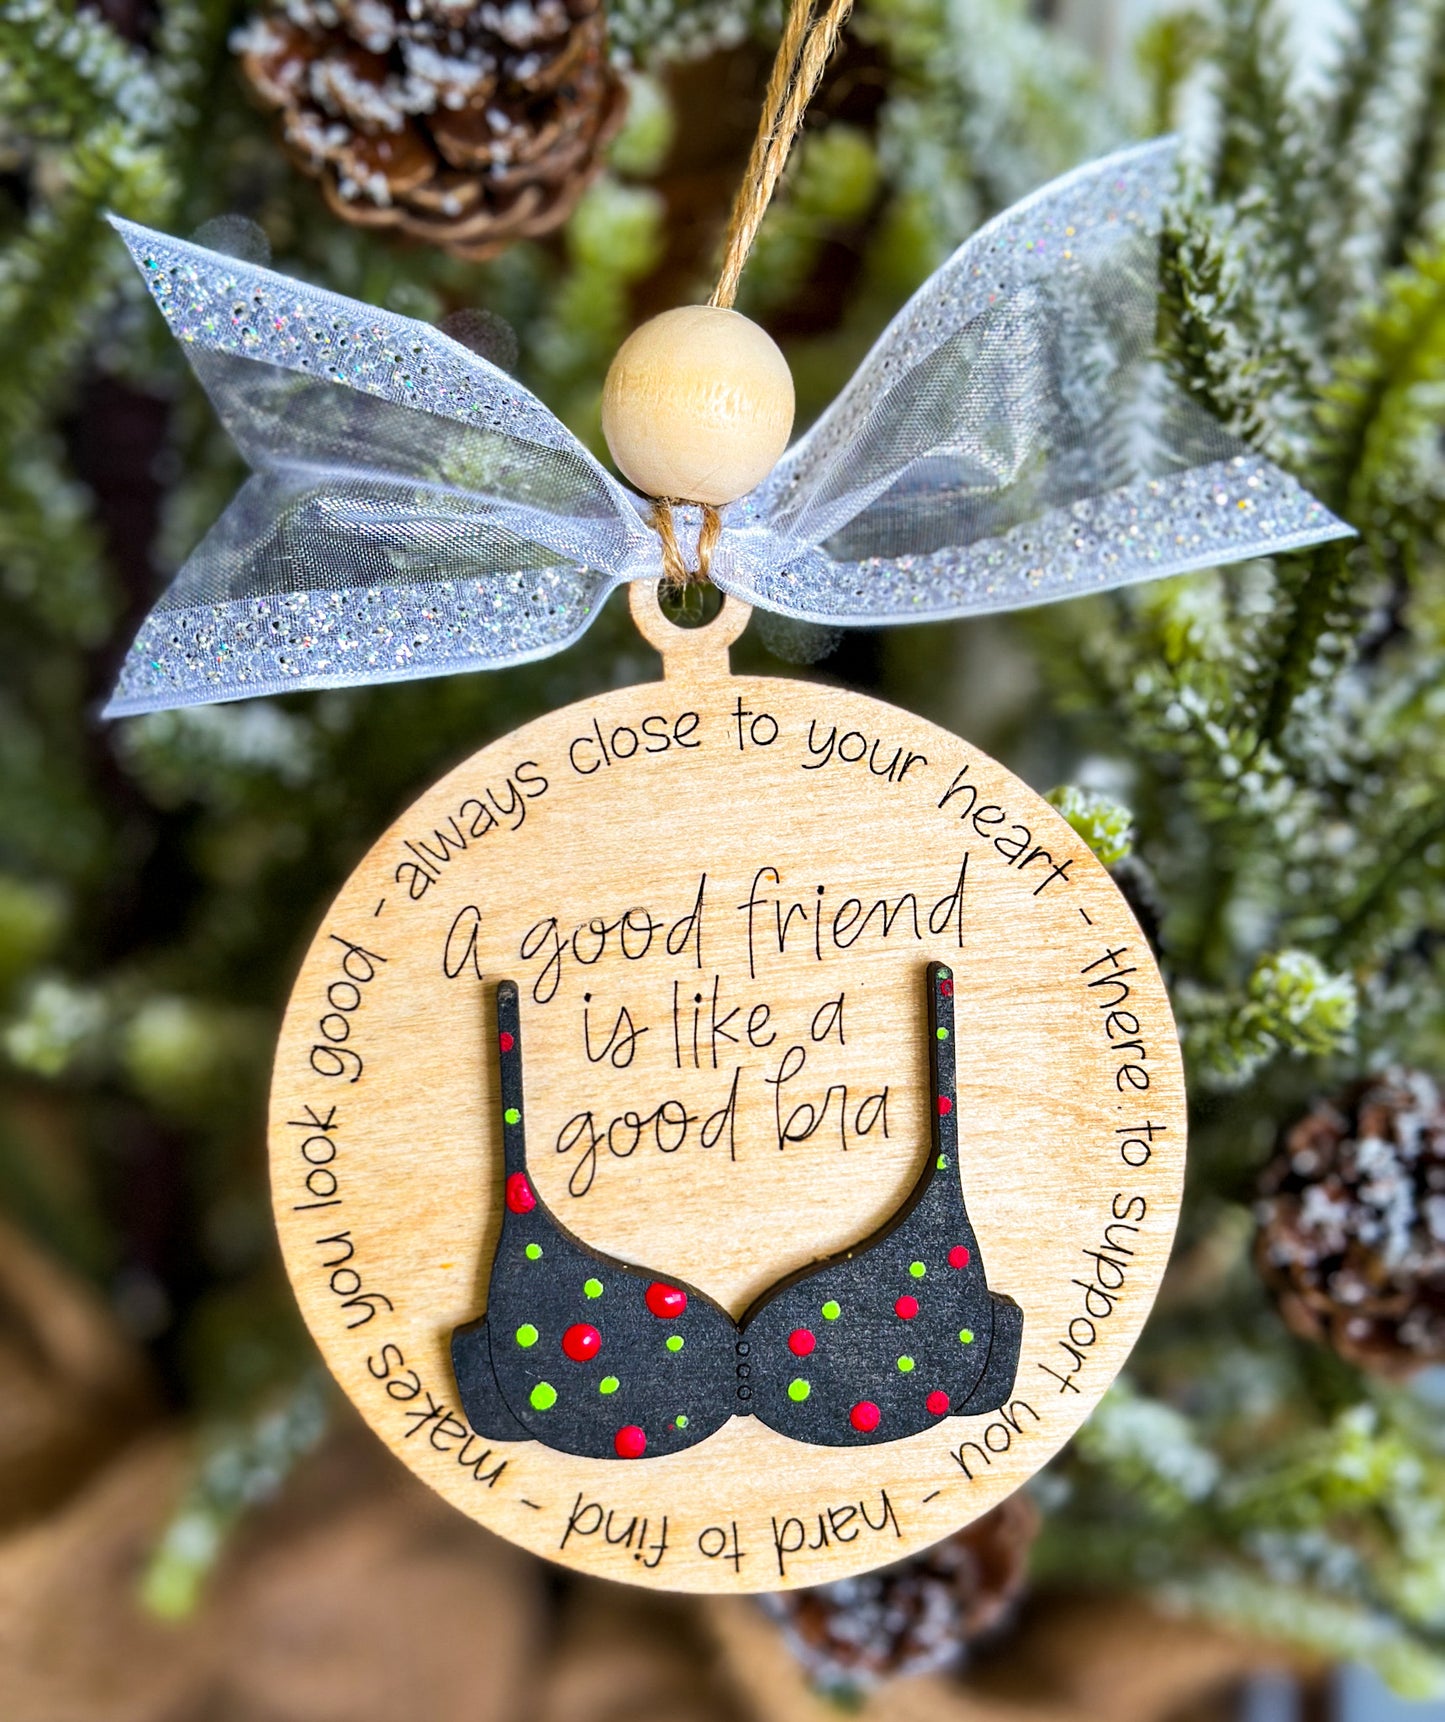 A Good Friend Like a Good Bra Ornament Graphic by mdhakim54196